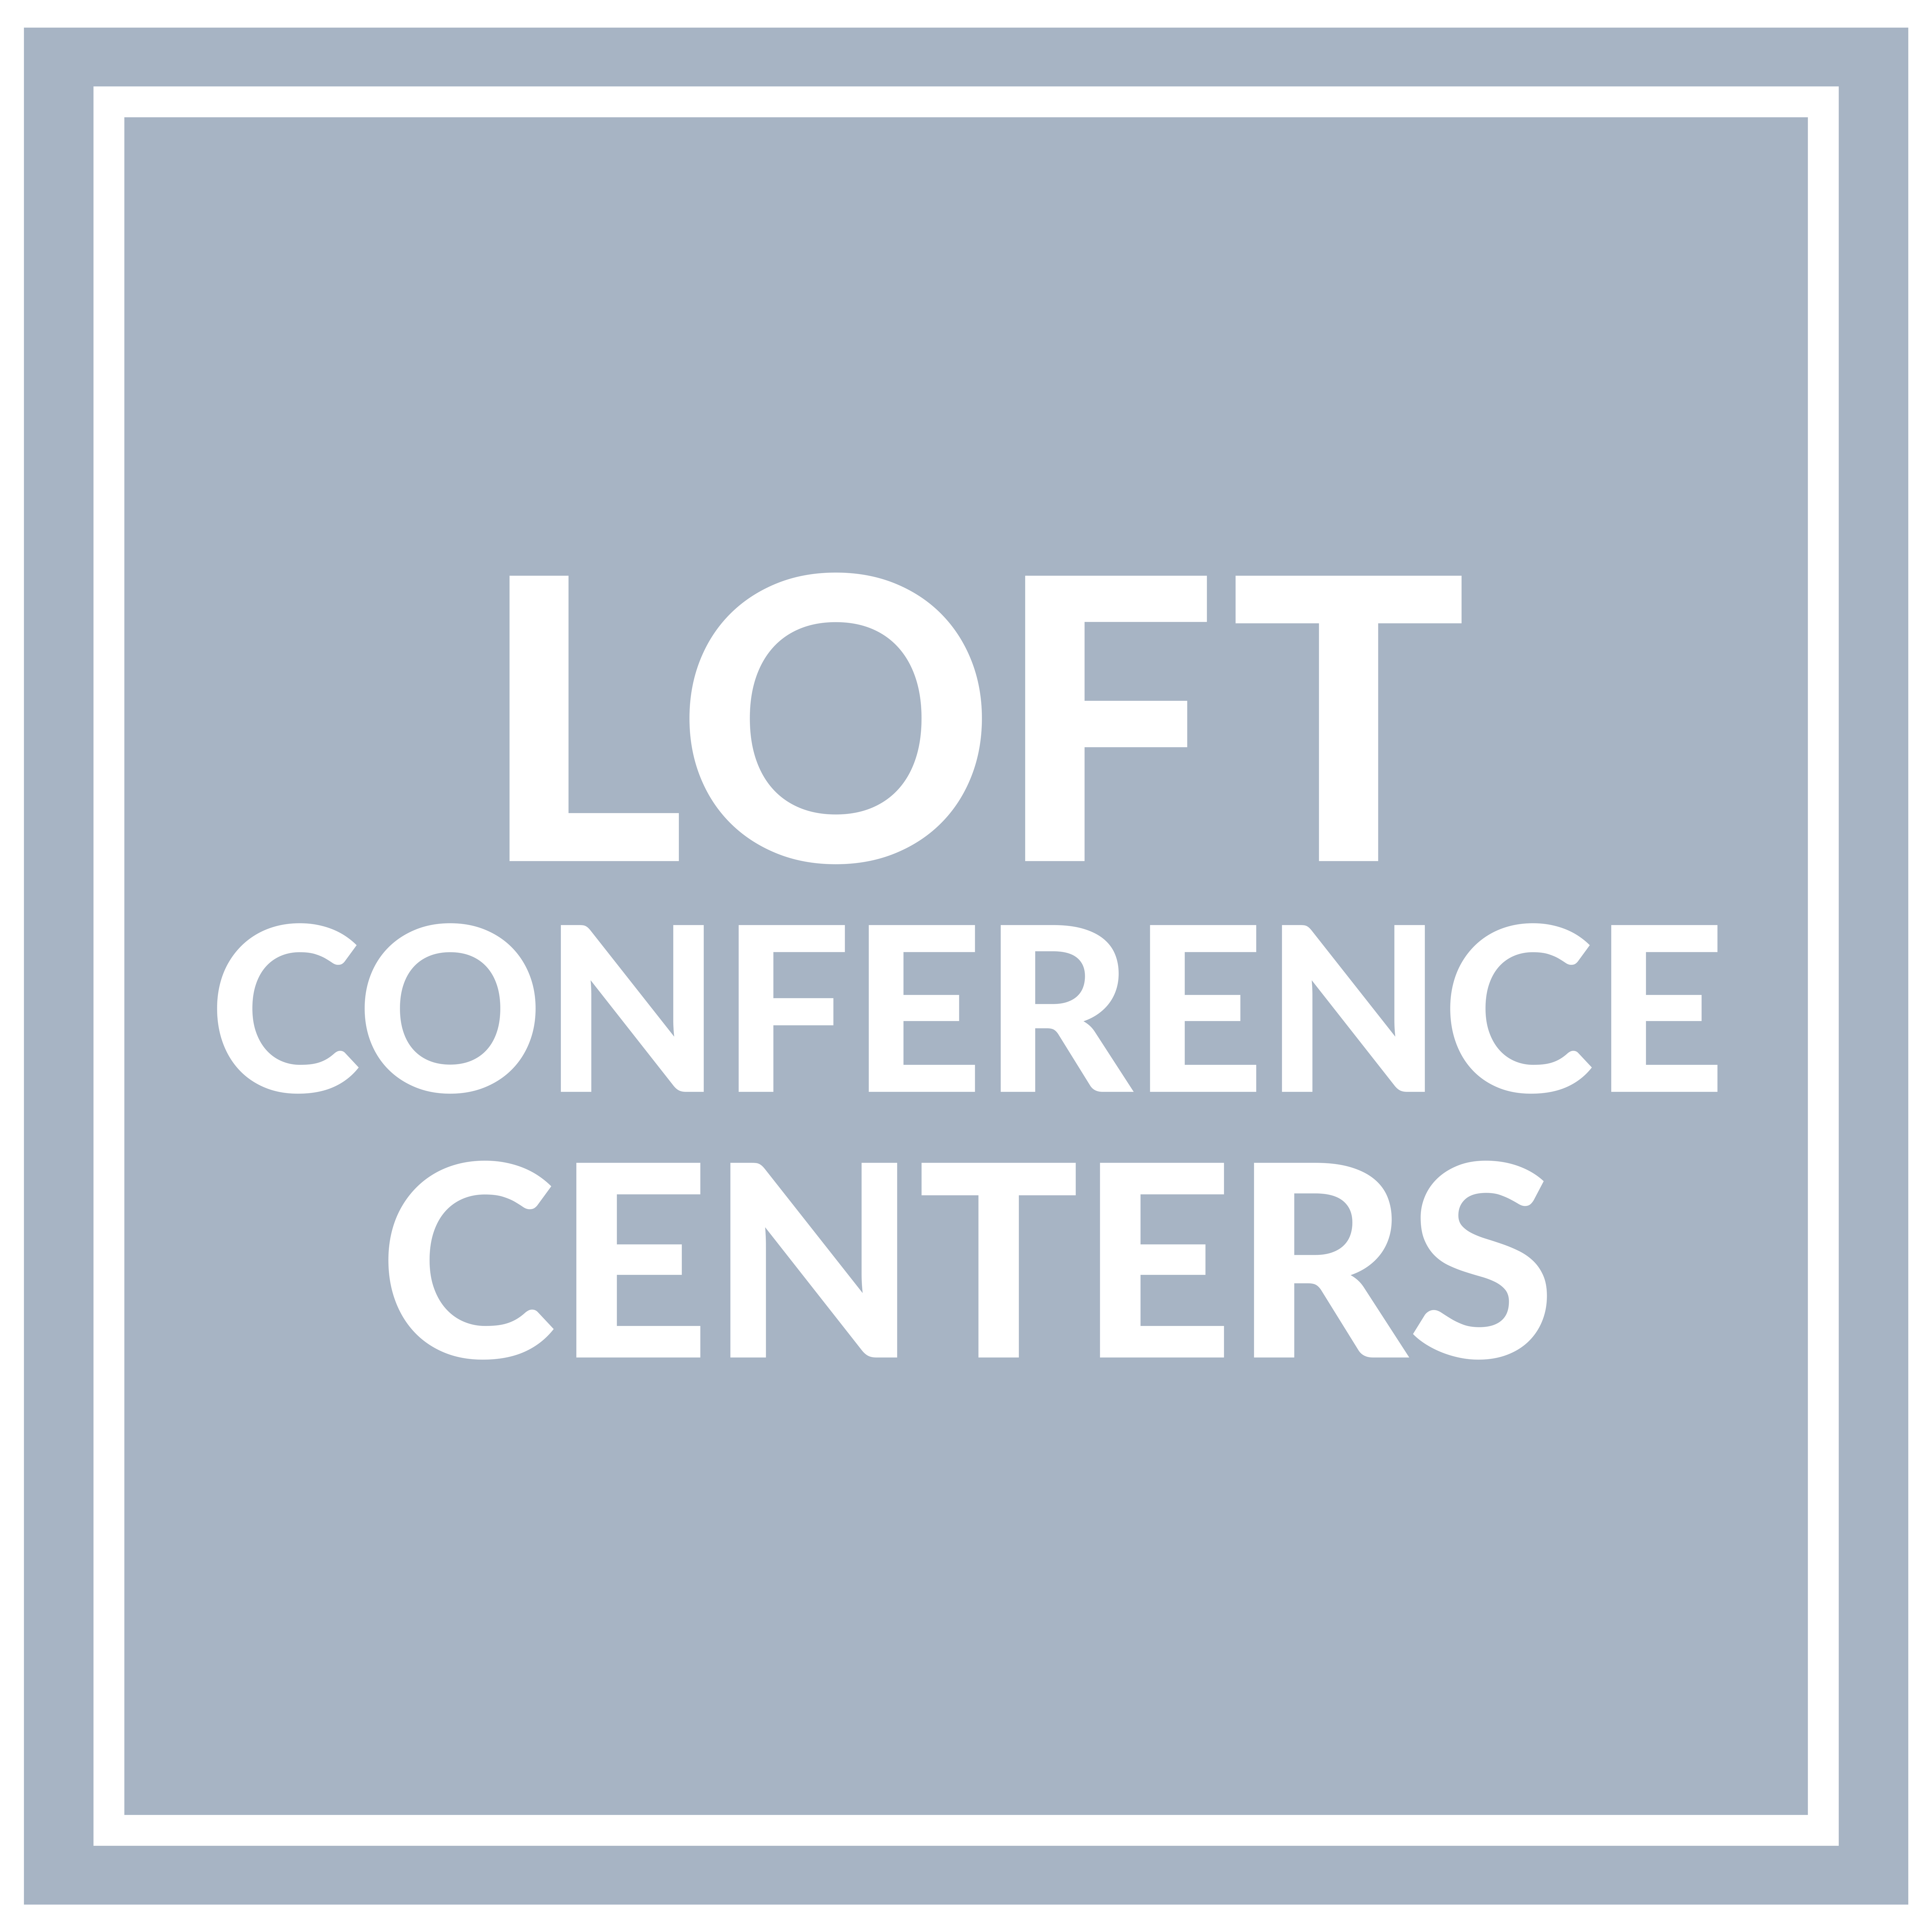 Loft Conference Centers